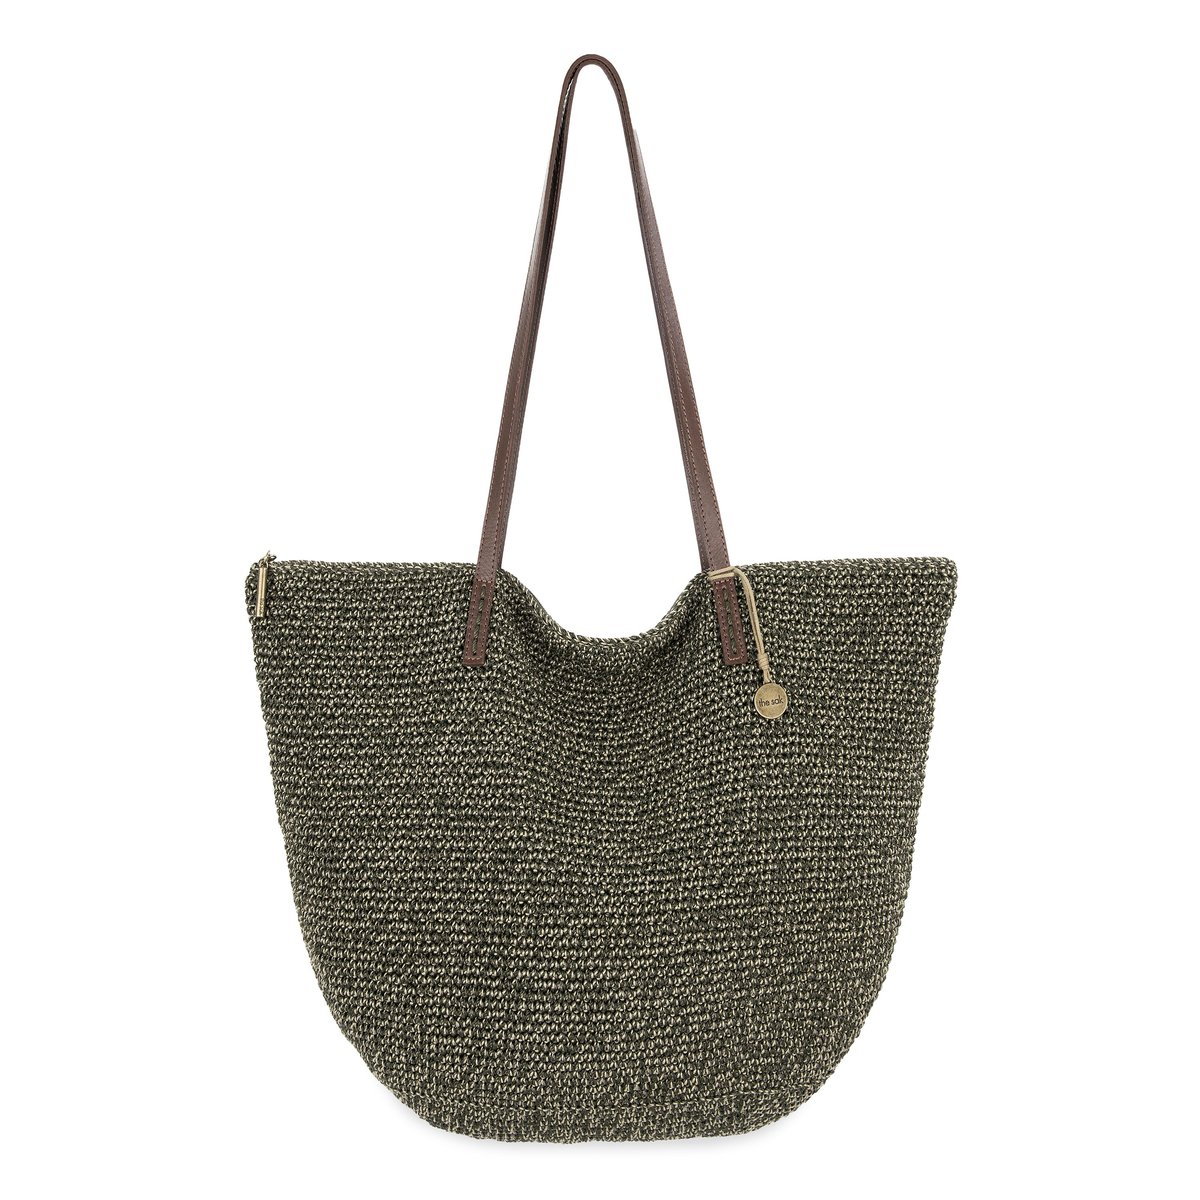 The Sak Crochet Purse Bag Braided Leather Handles Beige Grey